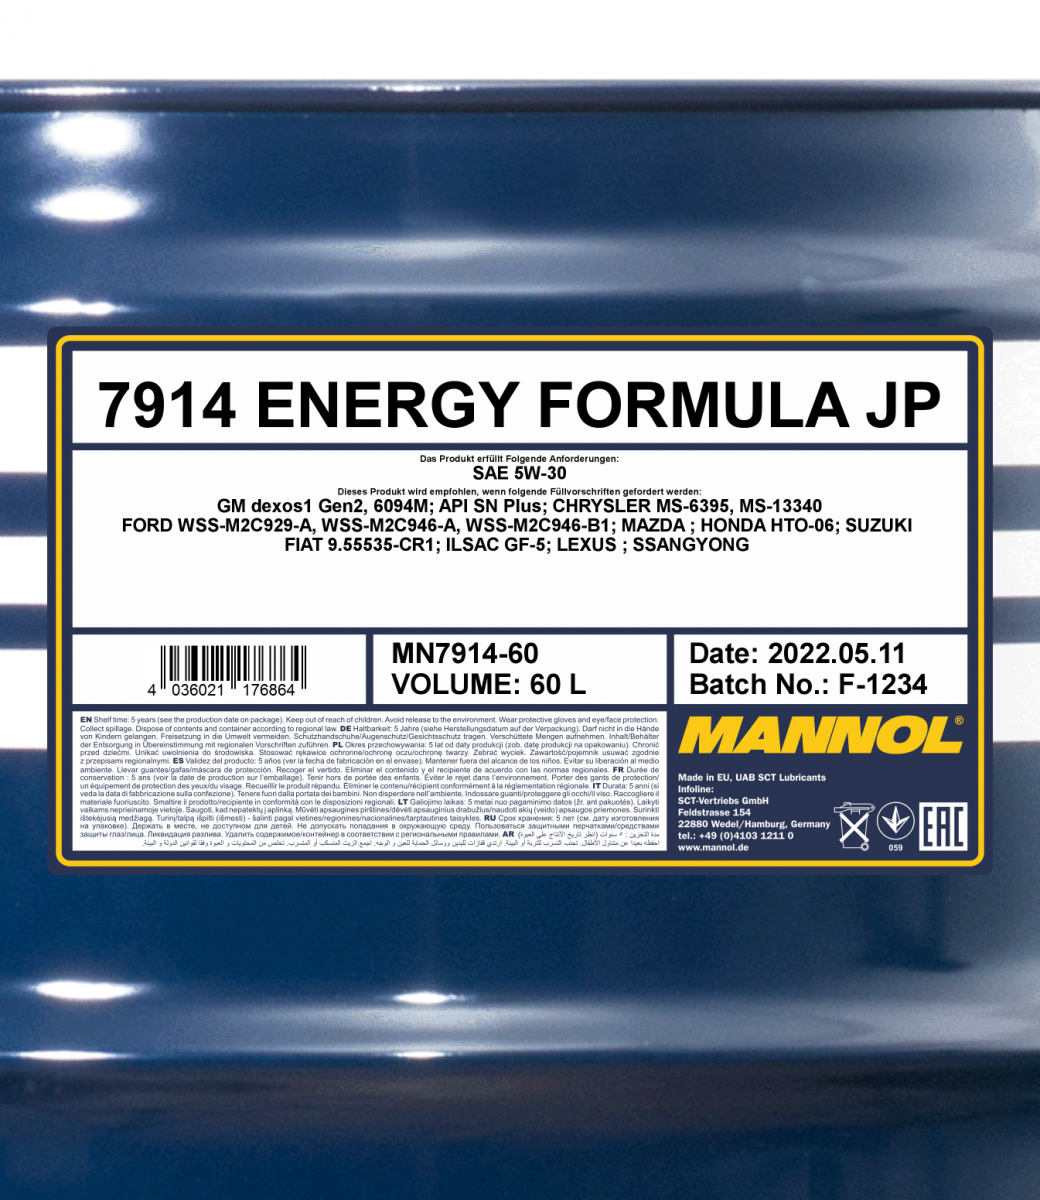 MANNOL Engineoil 5W30 Energy Formula JP 2 X 4 liters buy online b, 35,95 €